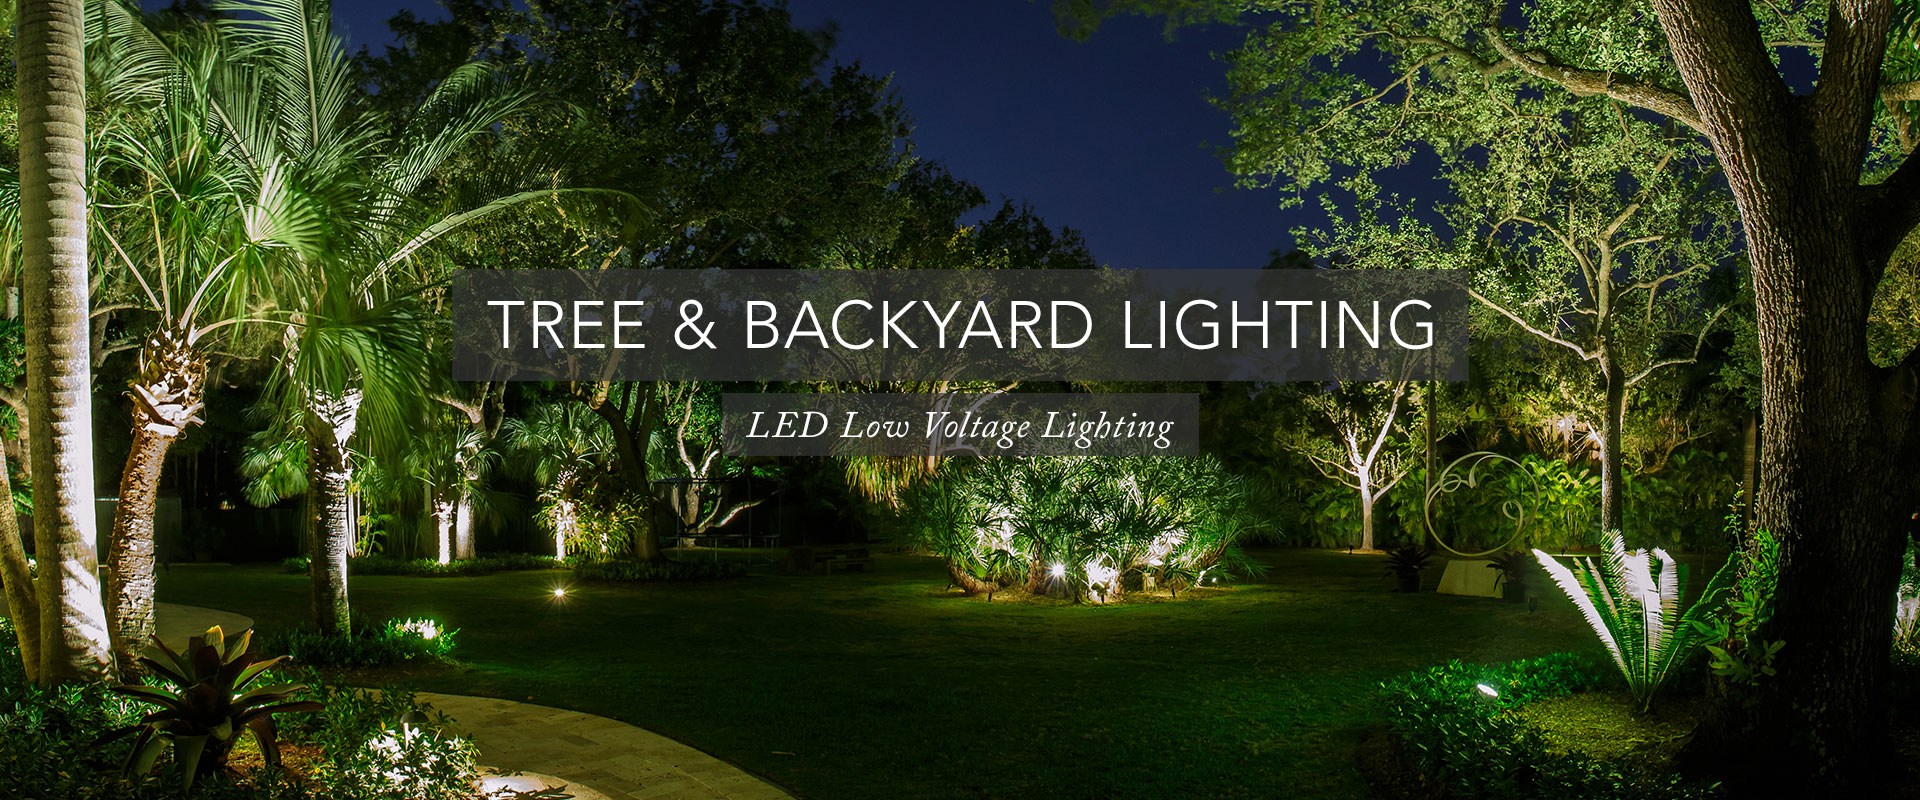 Tree & Backyard Lighting